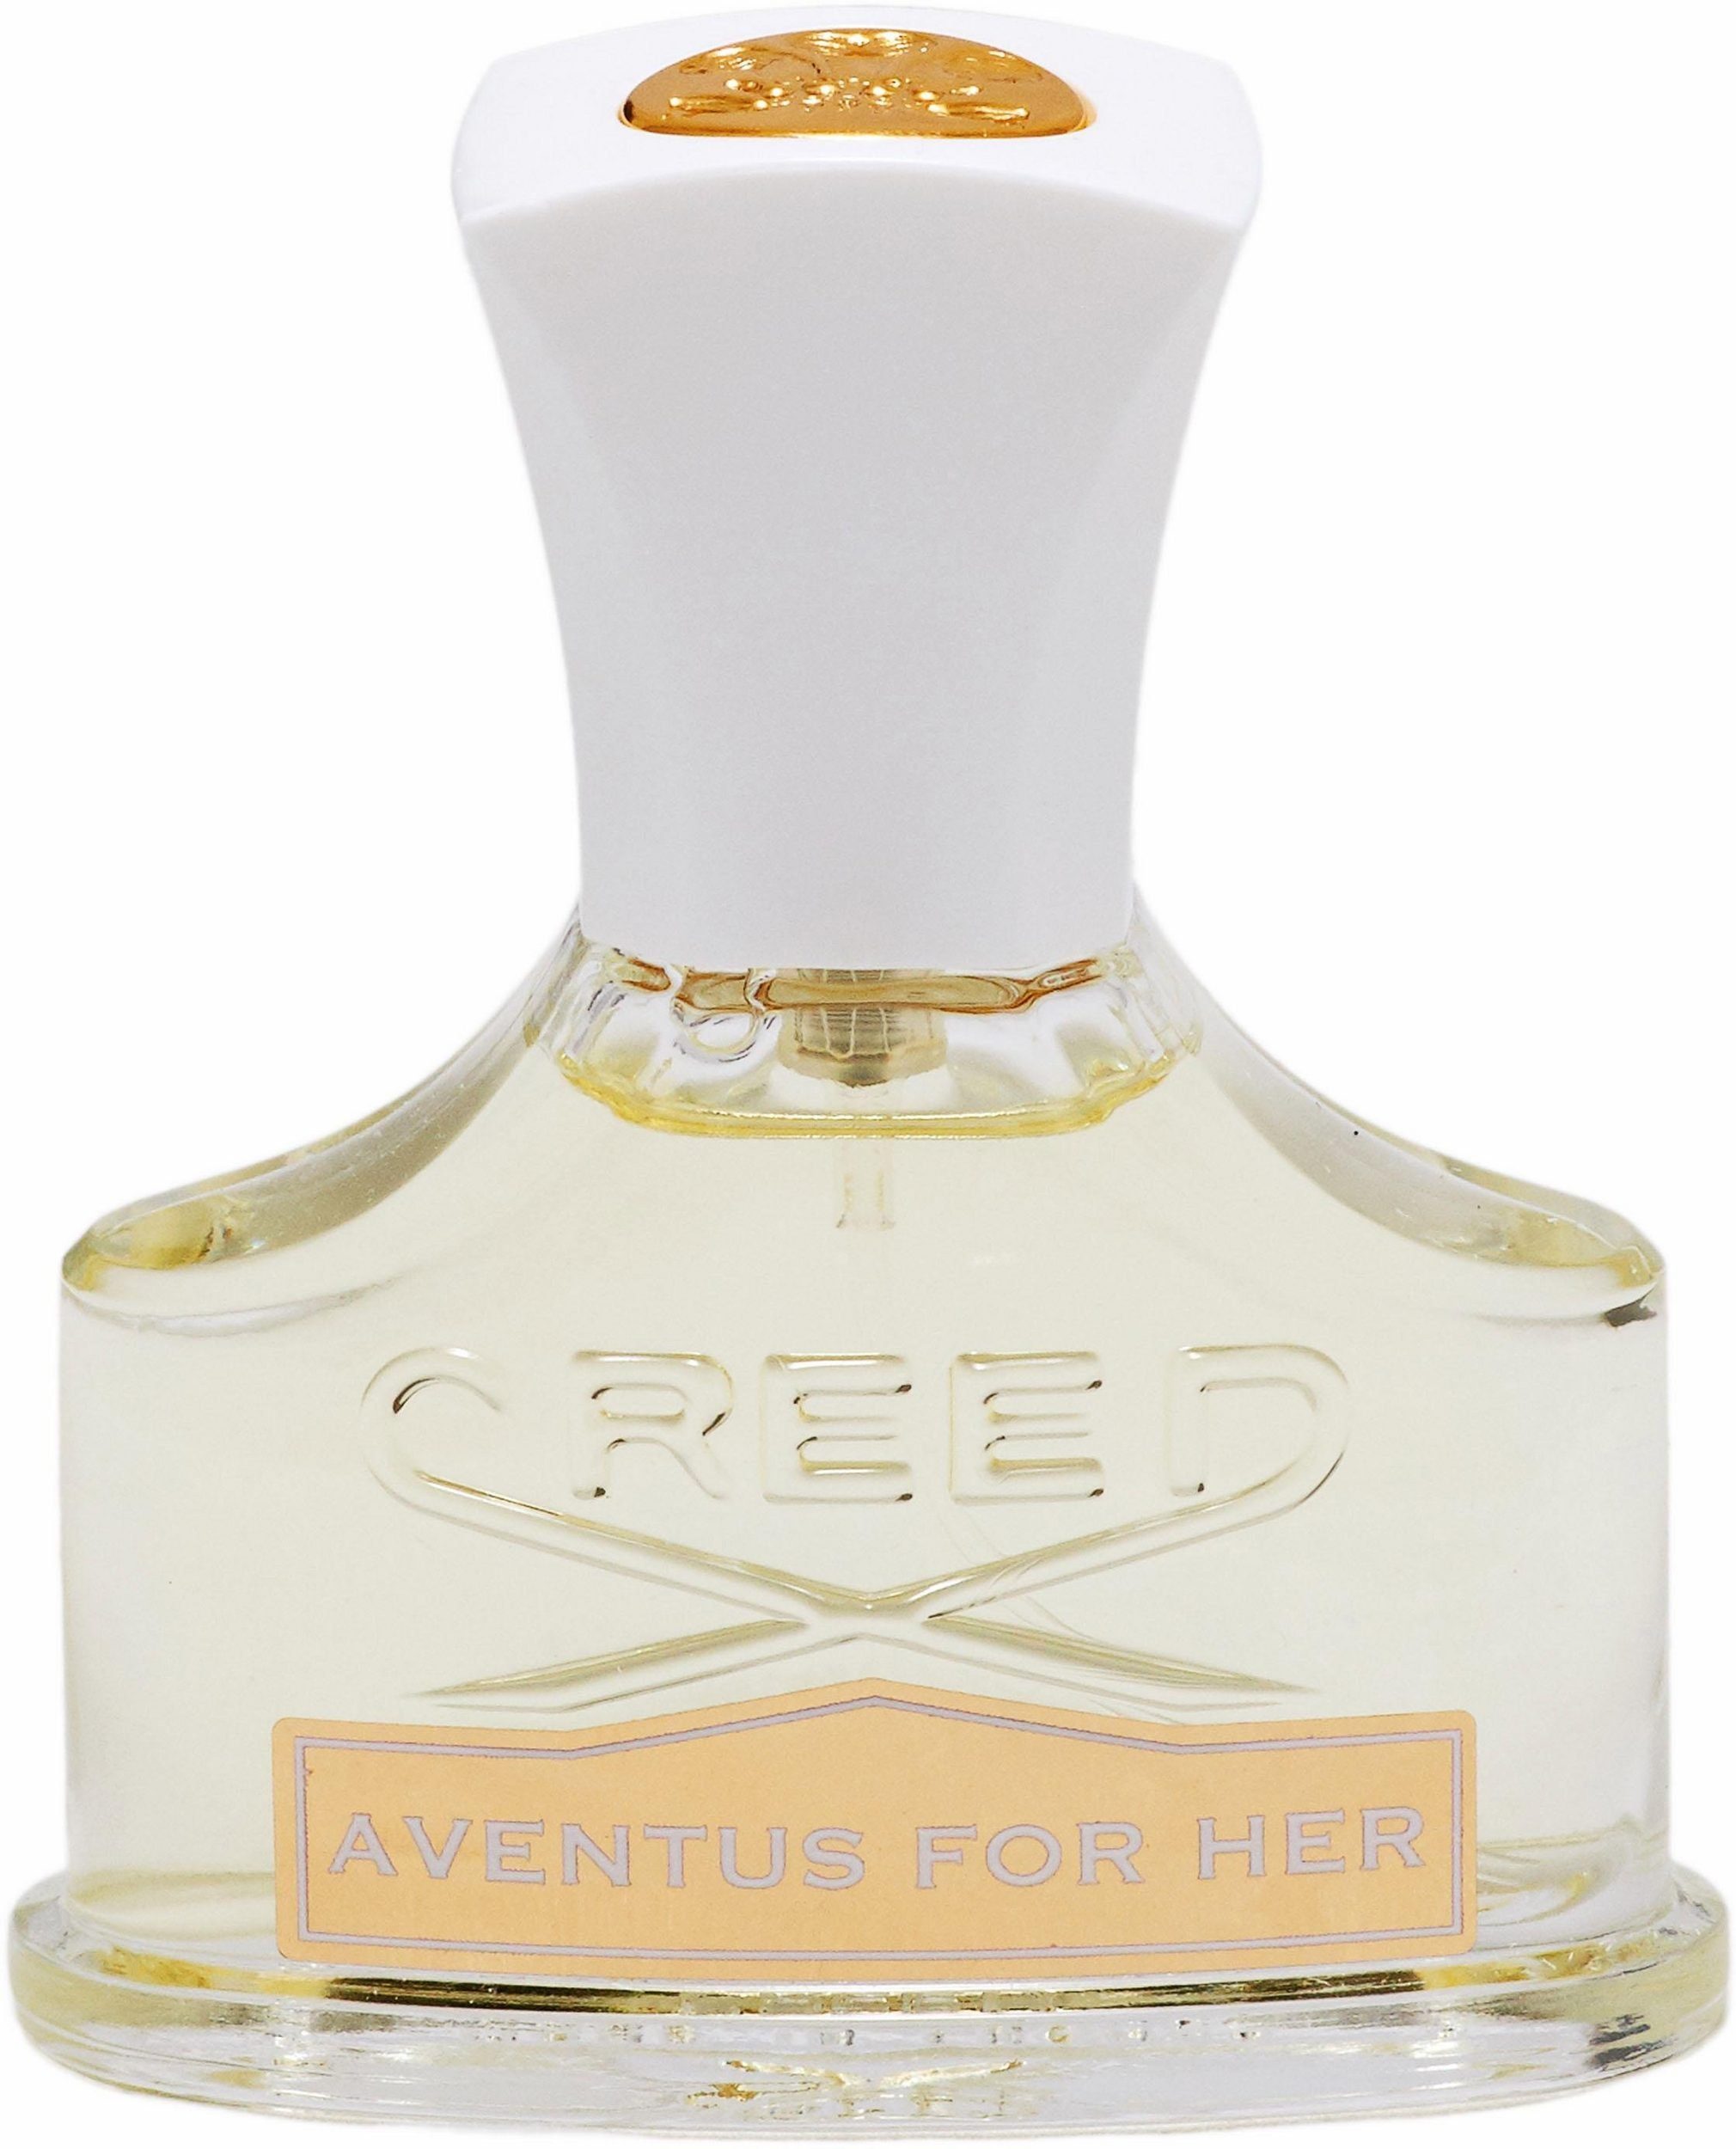 Aventus Creed for Parfum de Her Eau